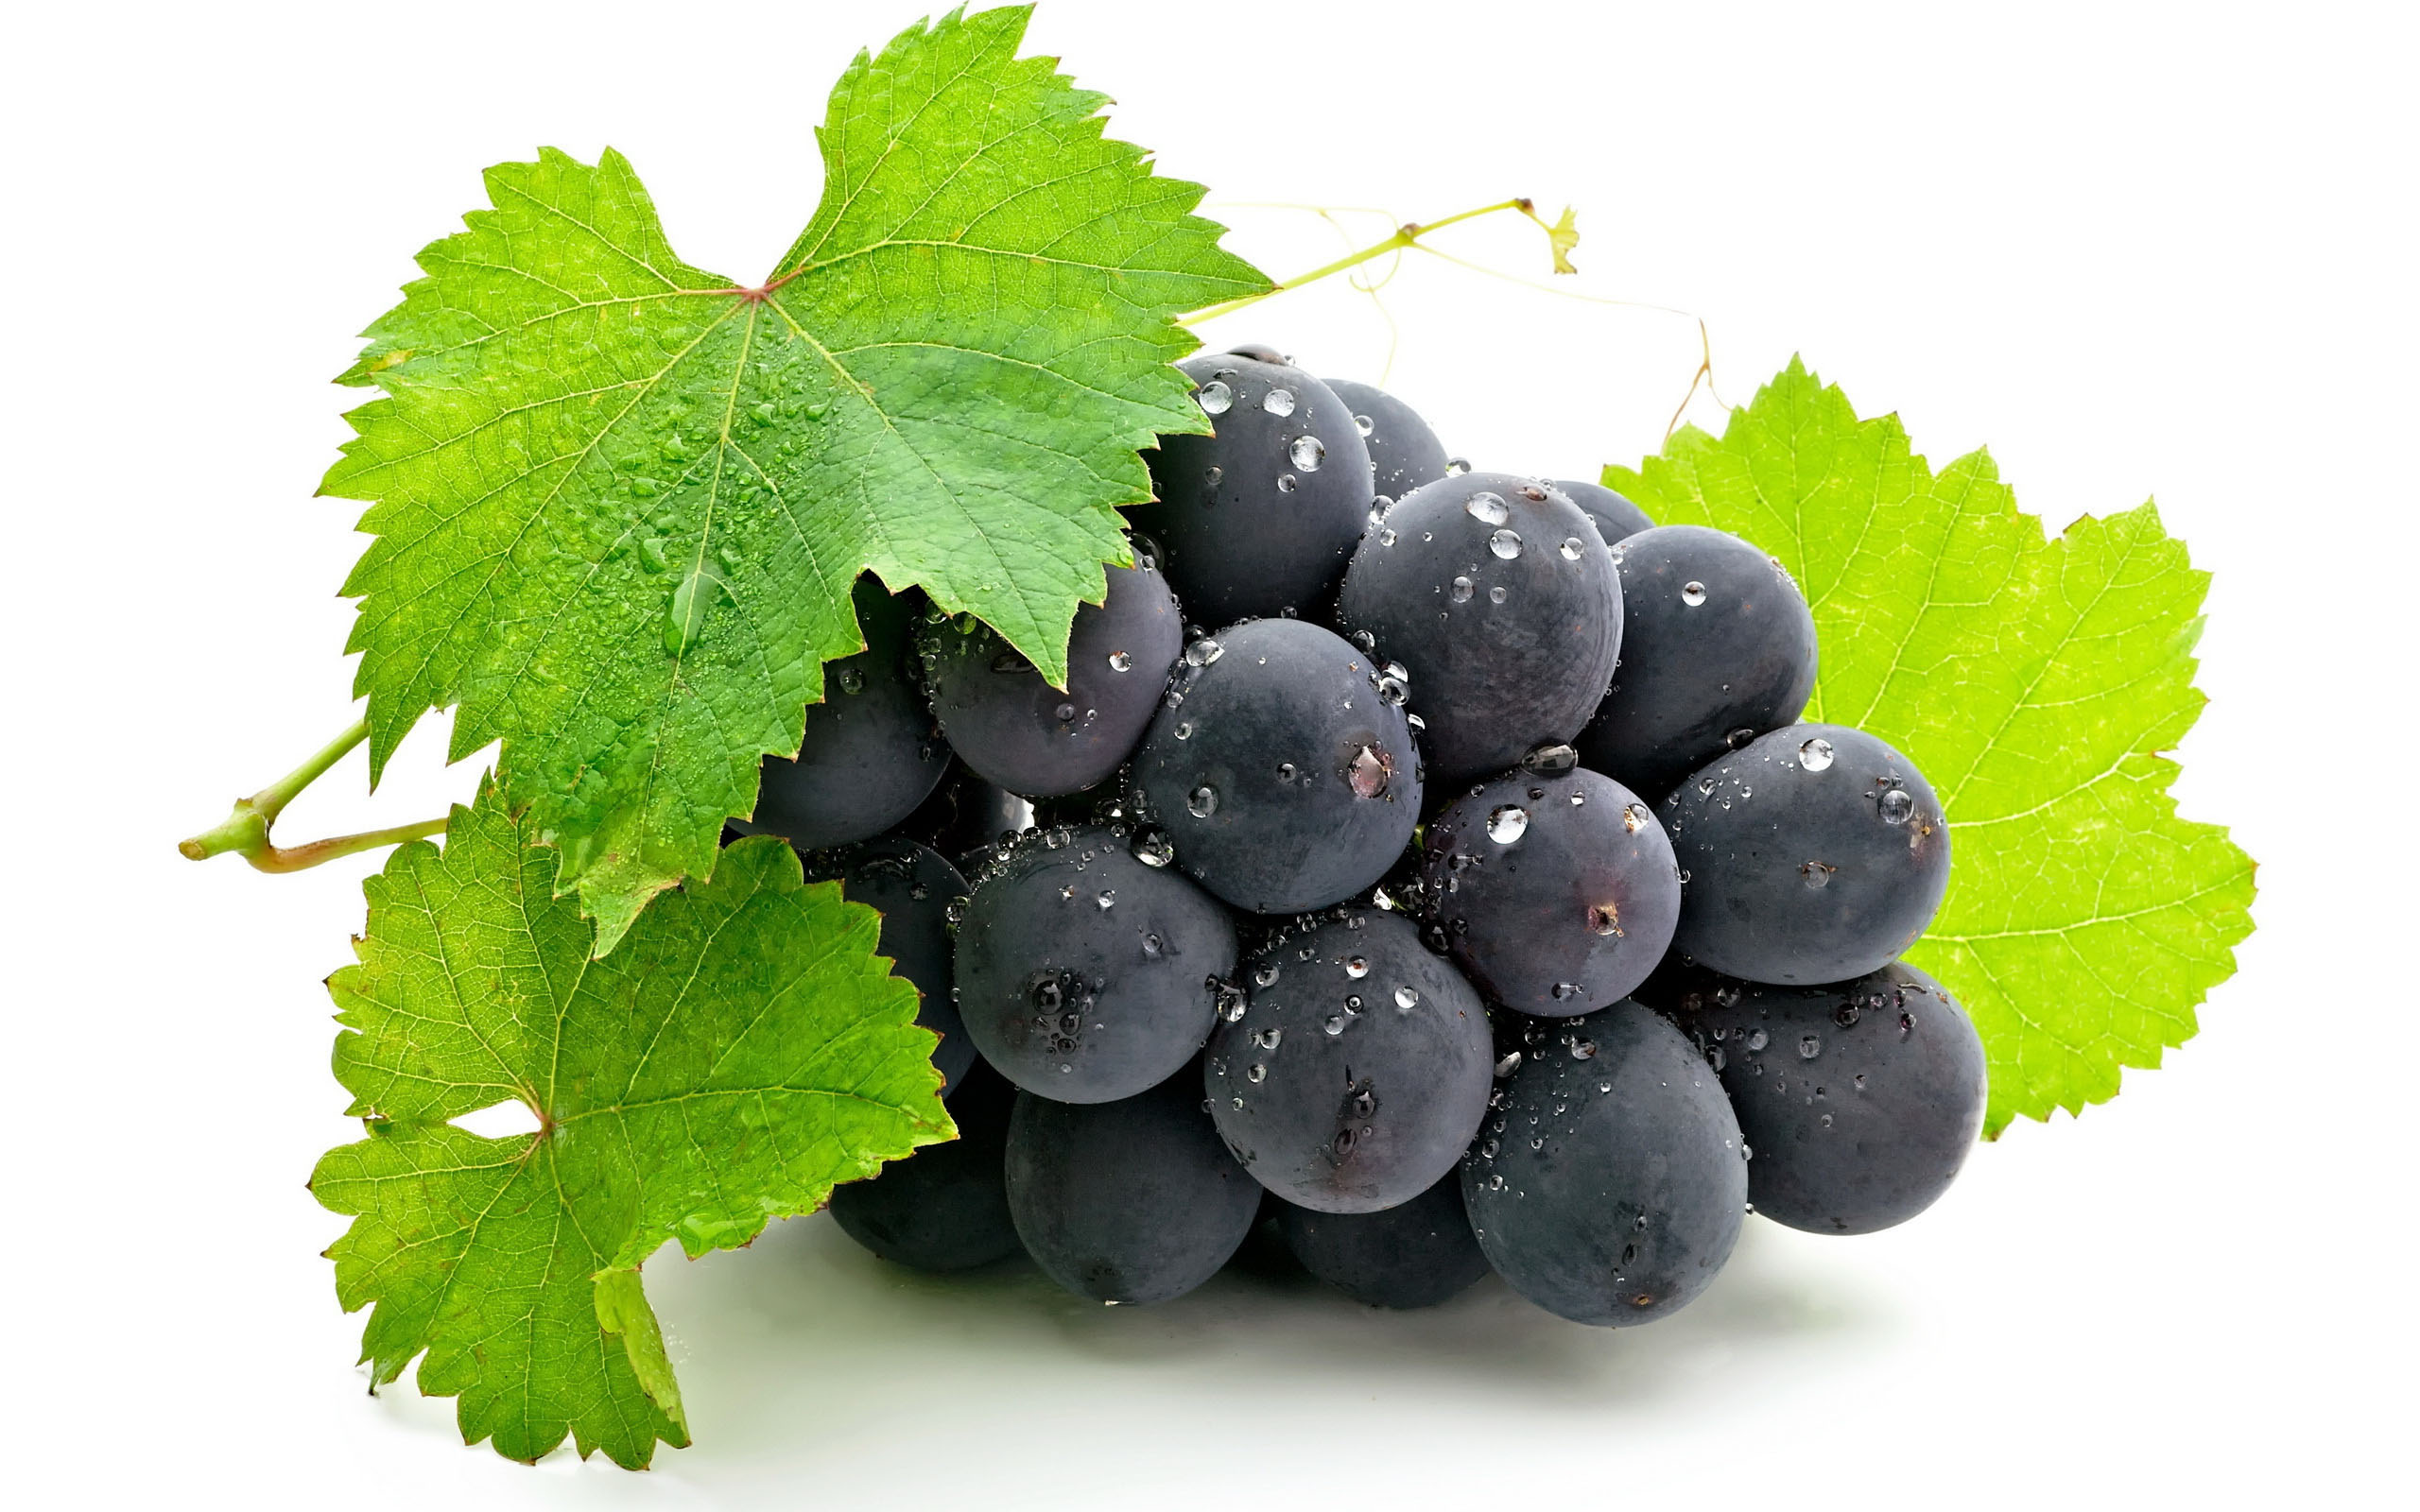 Картинка по теме: Можно ли виноград при диабете?